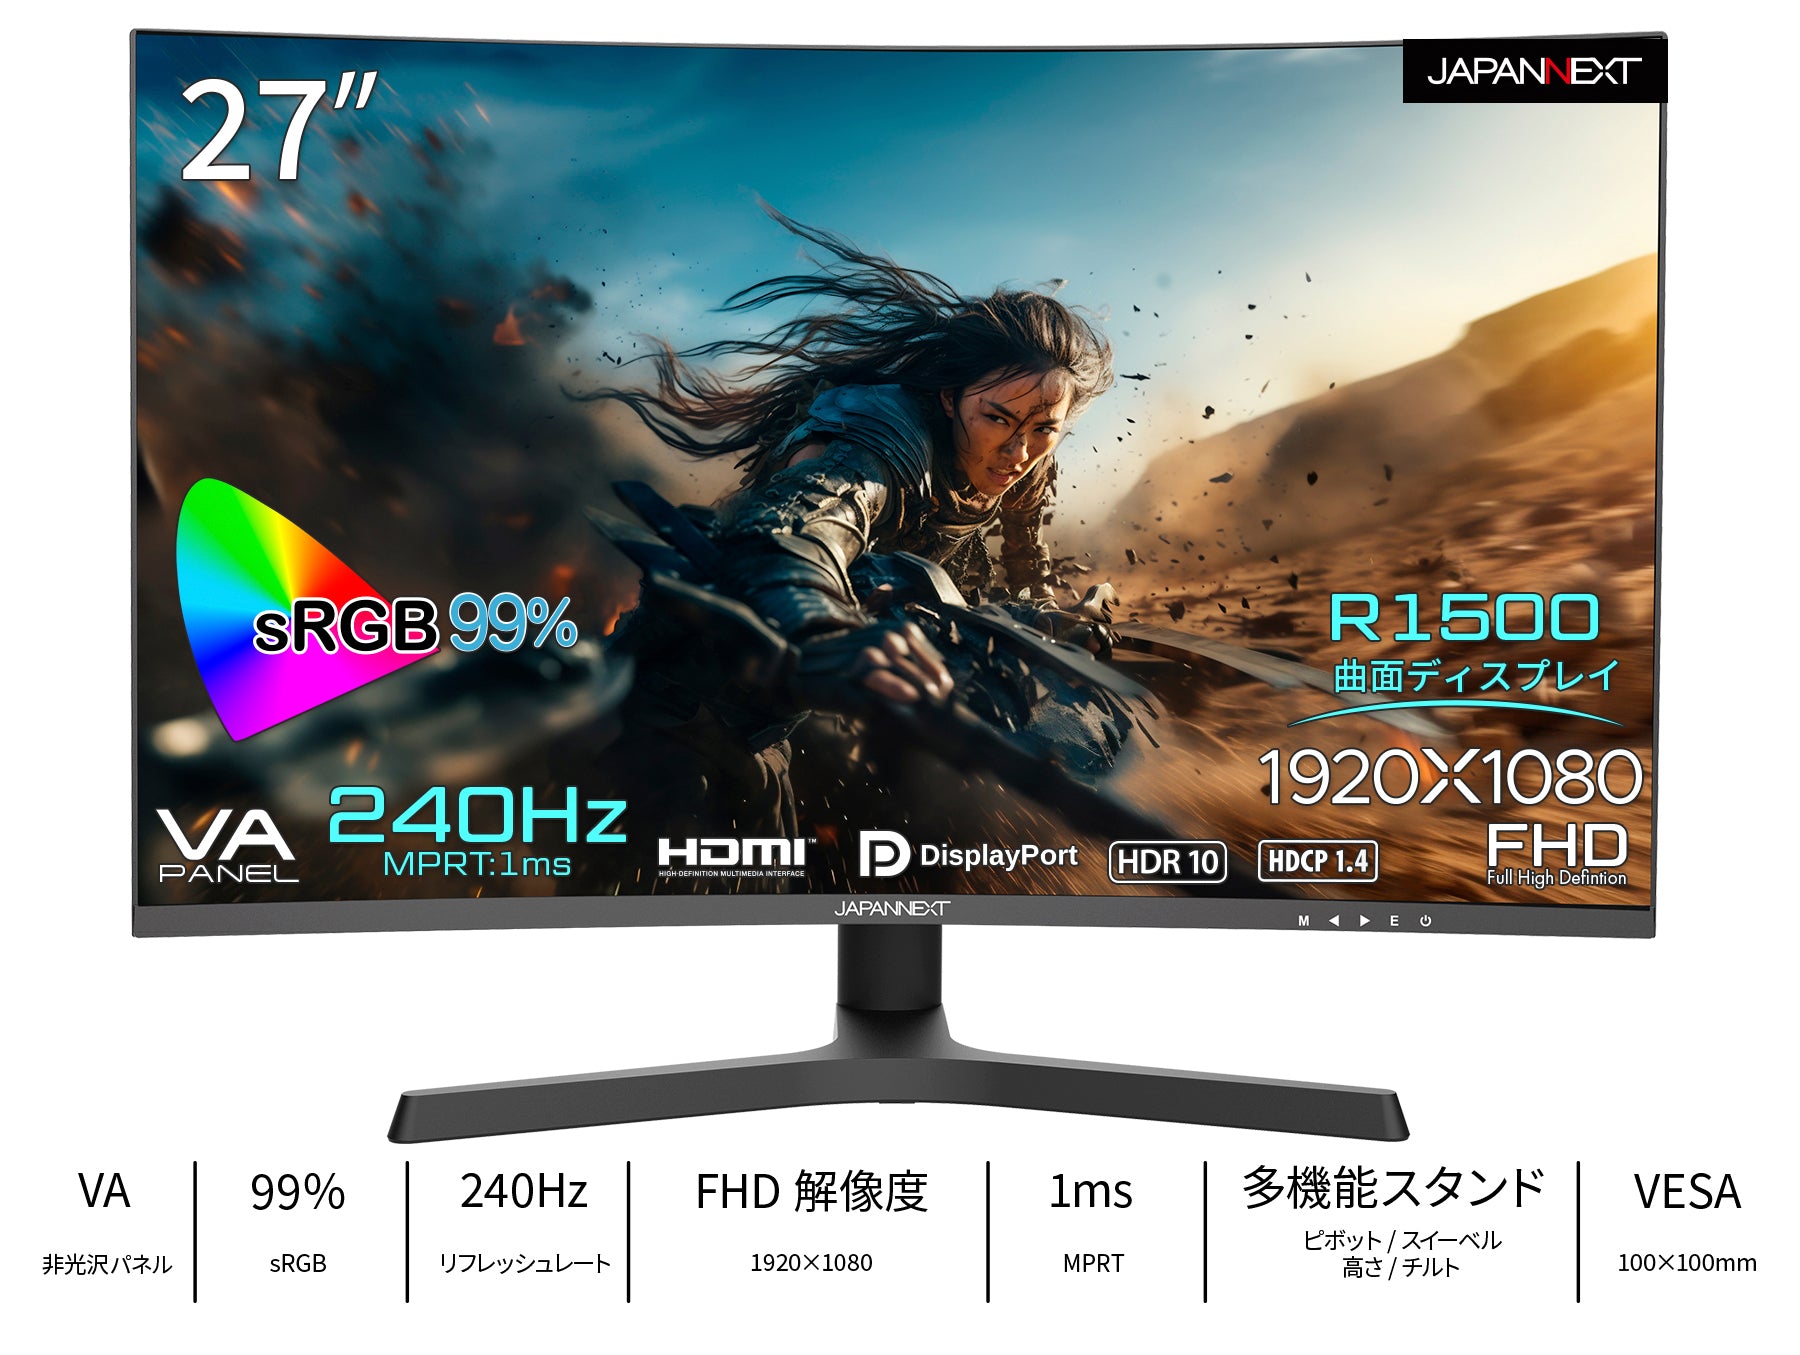 JAPANNEXT 27インチ 曲面 Full HD(1920x1080) 240Hz 液晶 